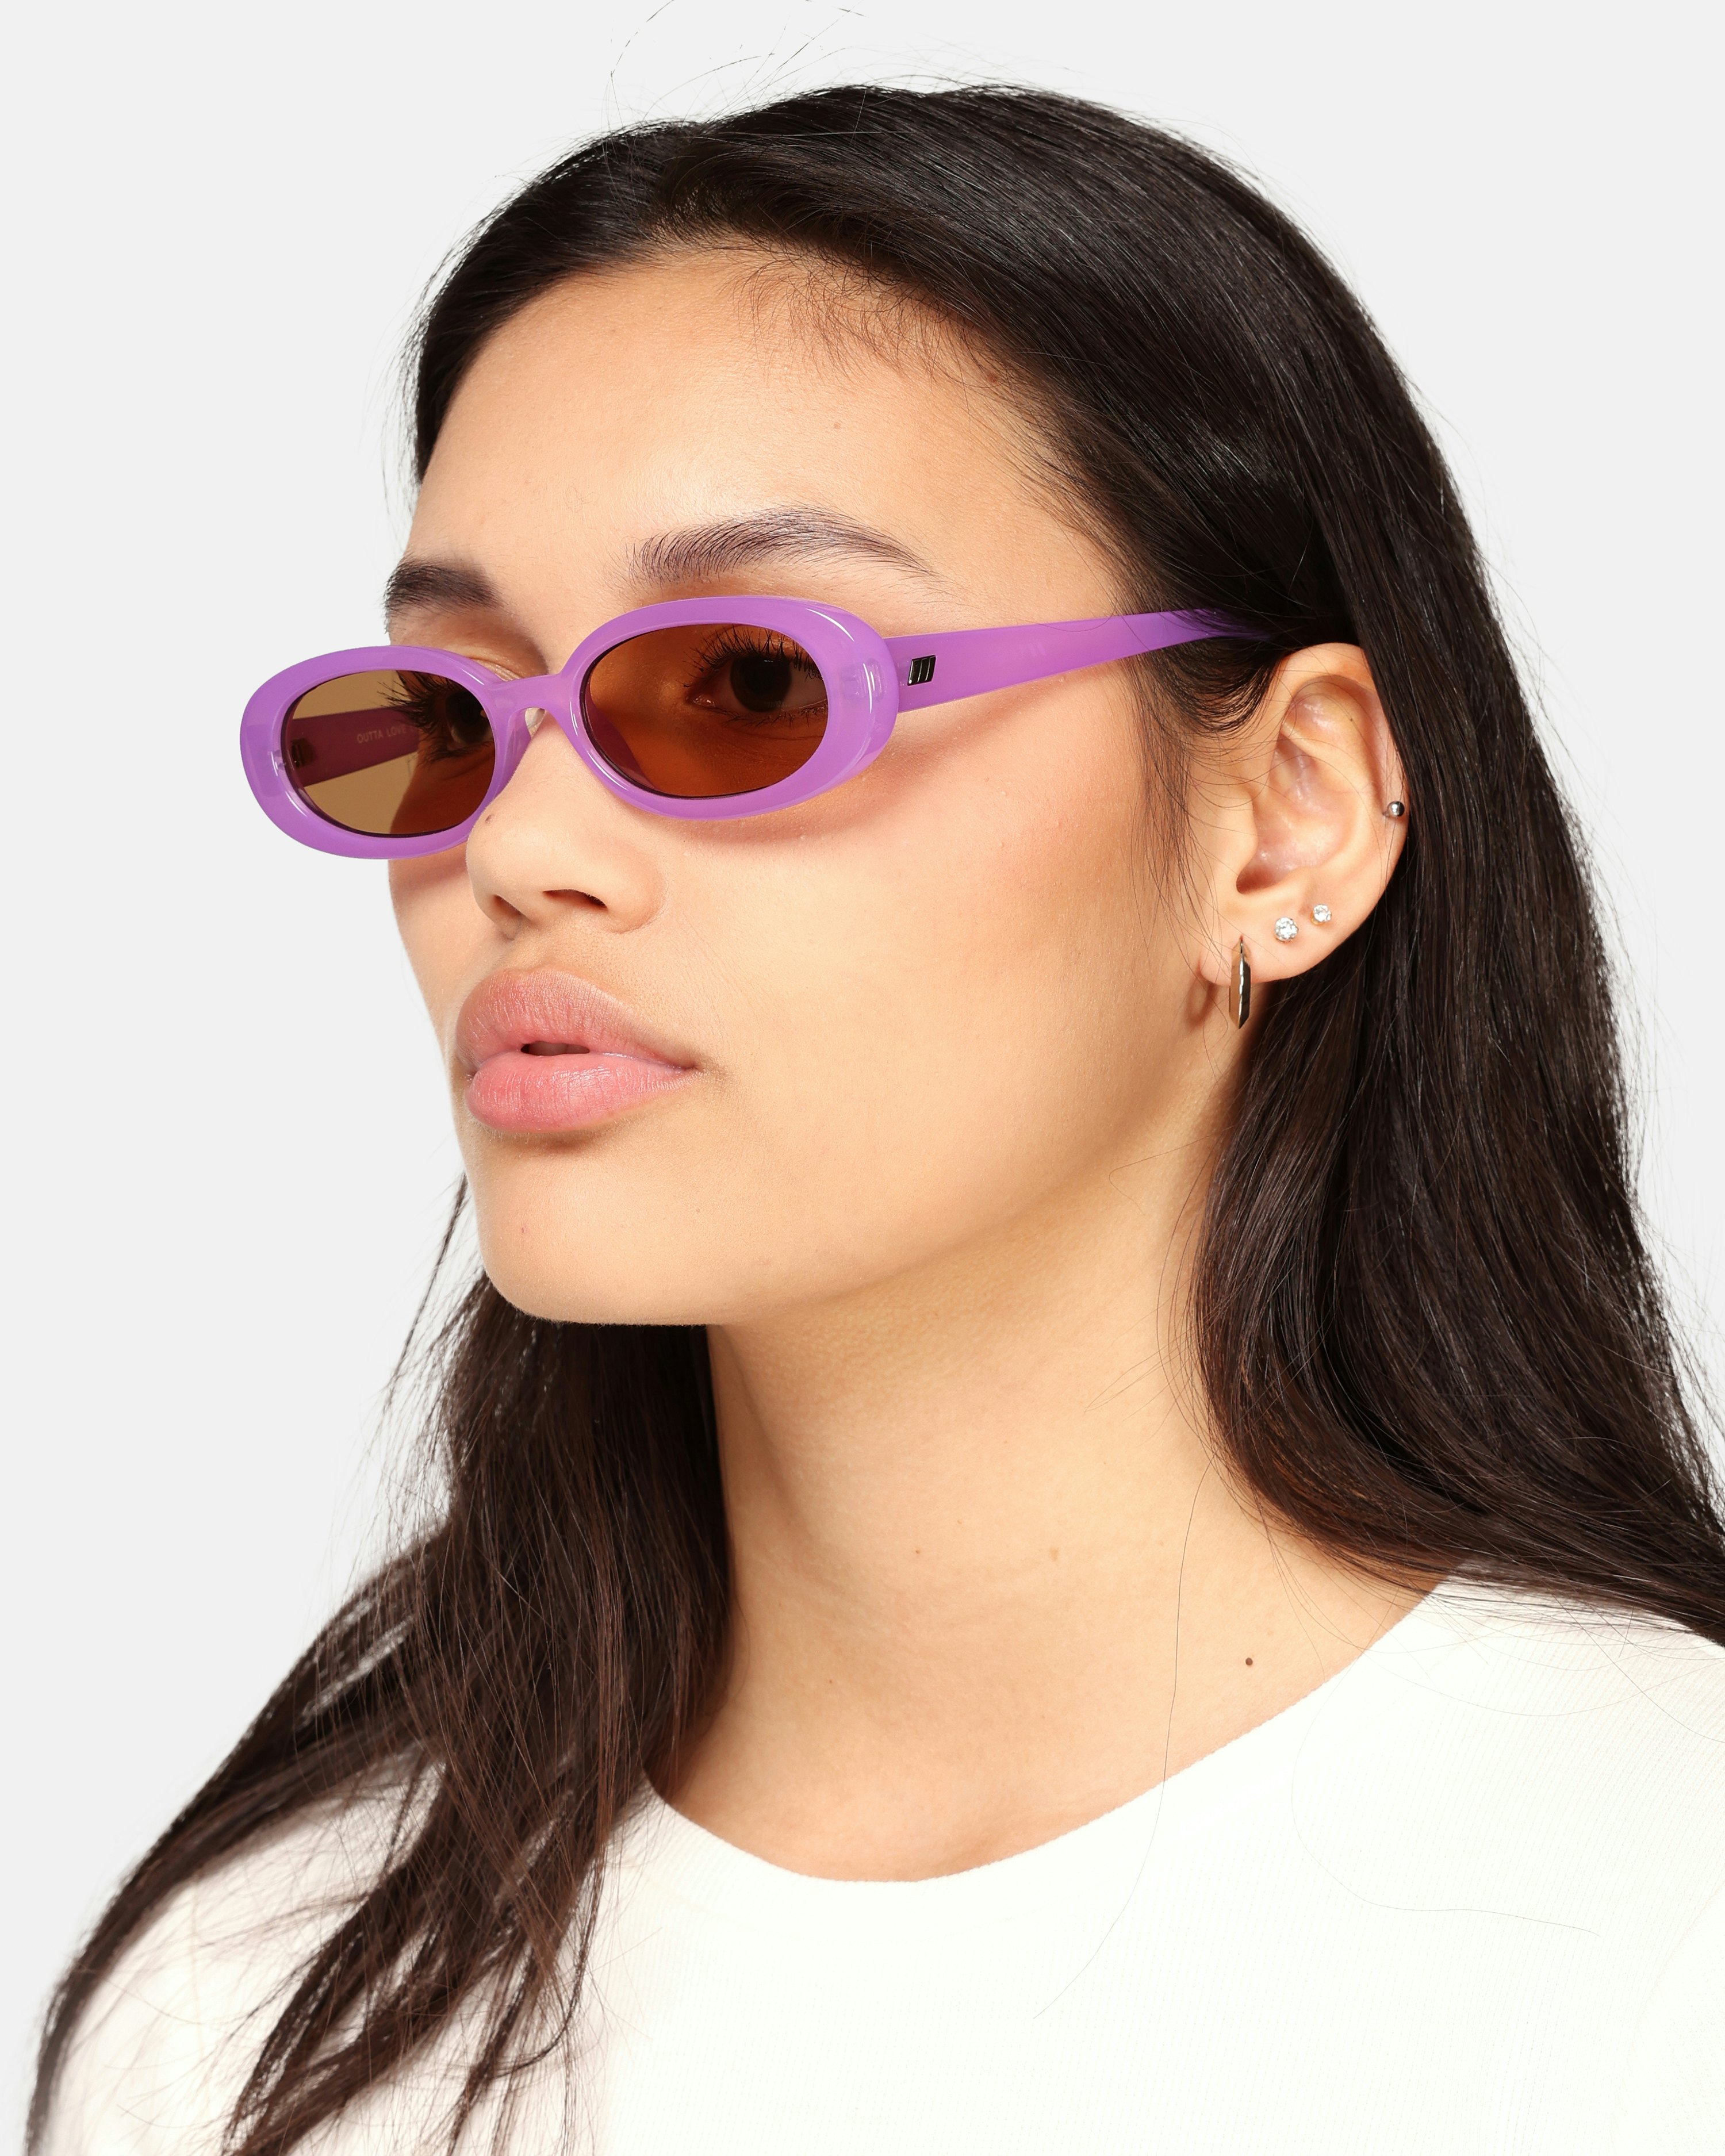 Purple Rain Sunglasses